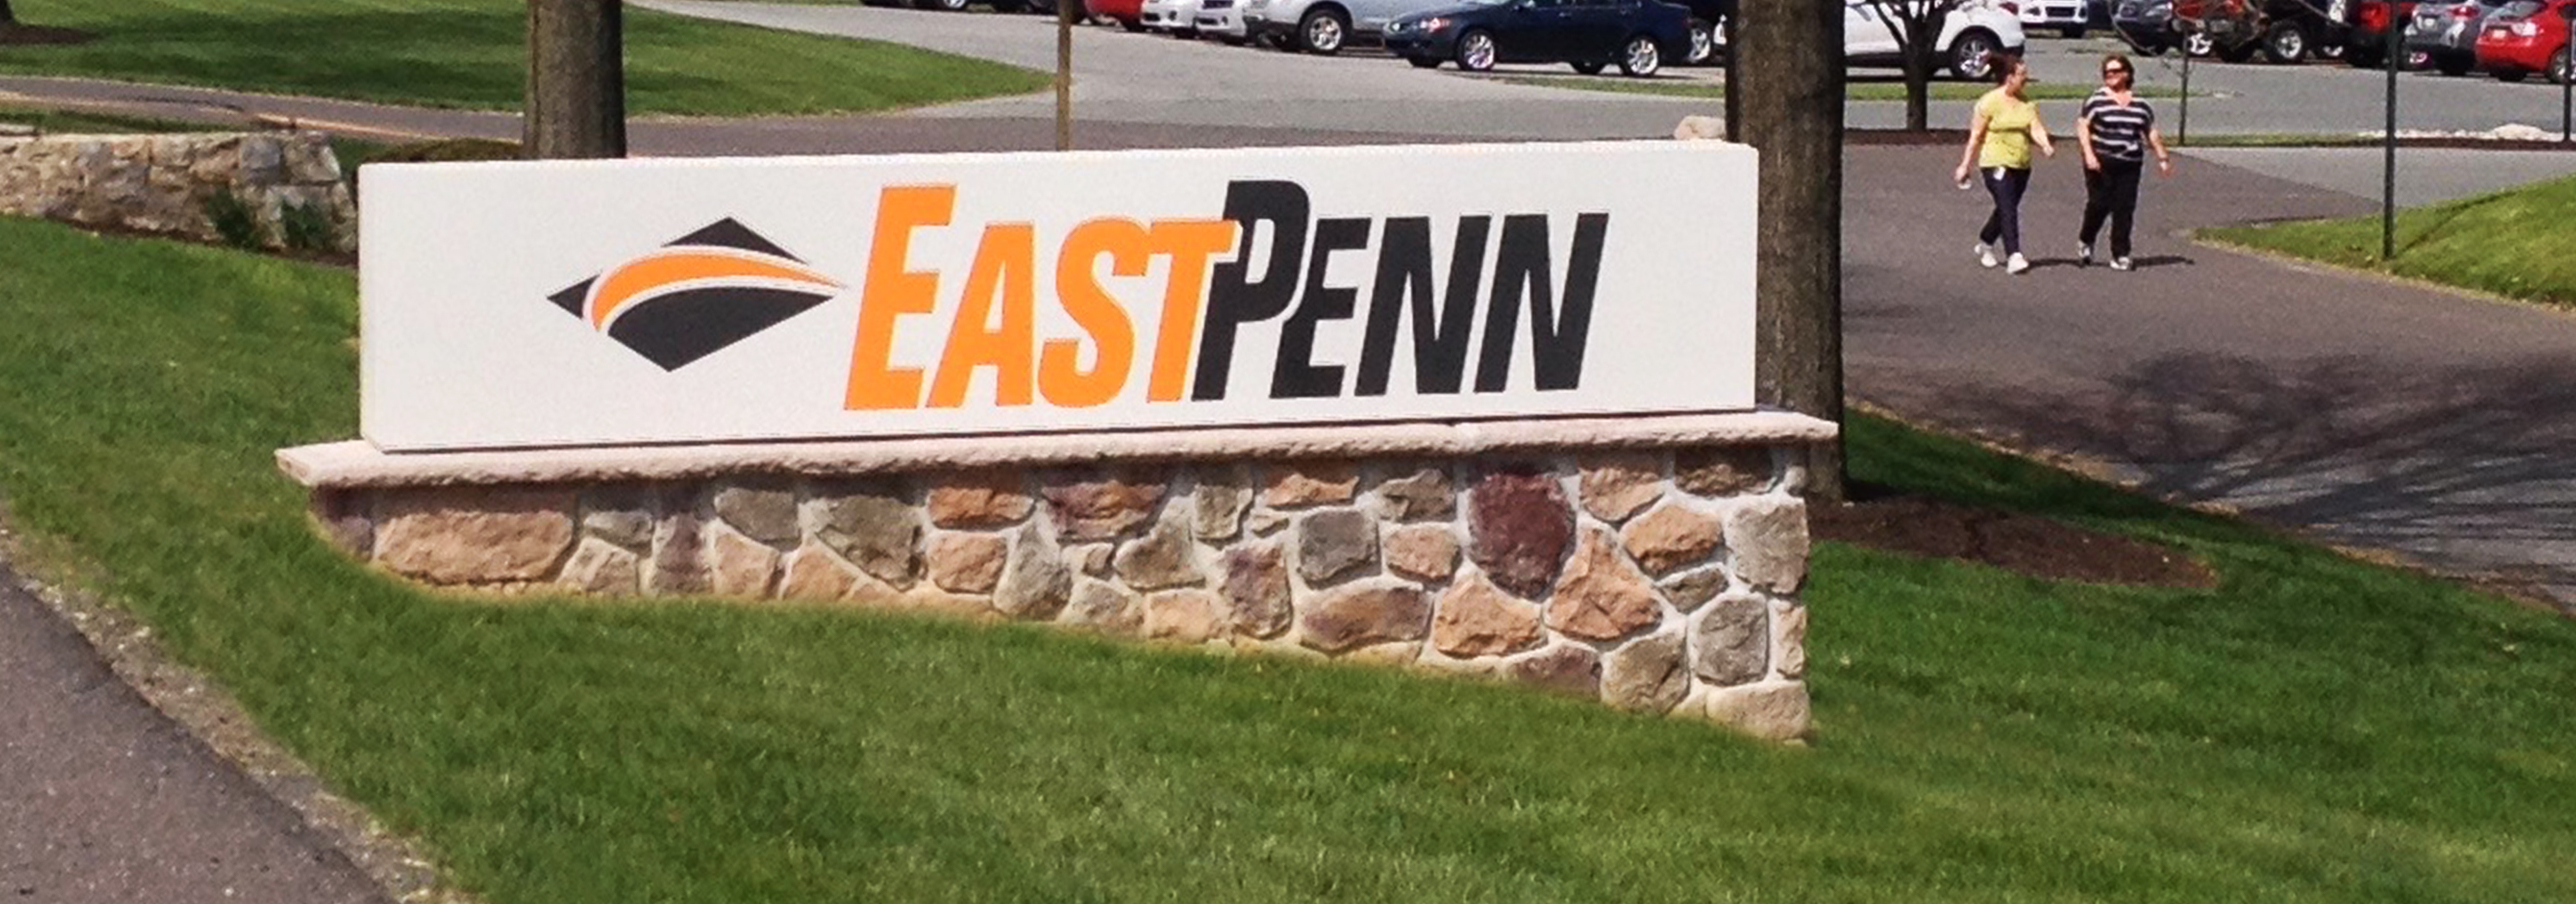 East Penn Manufacturing Logo Headquarters Signage, orange and black